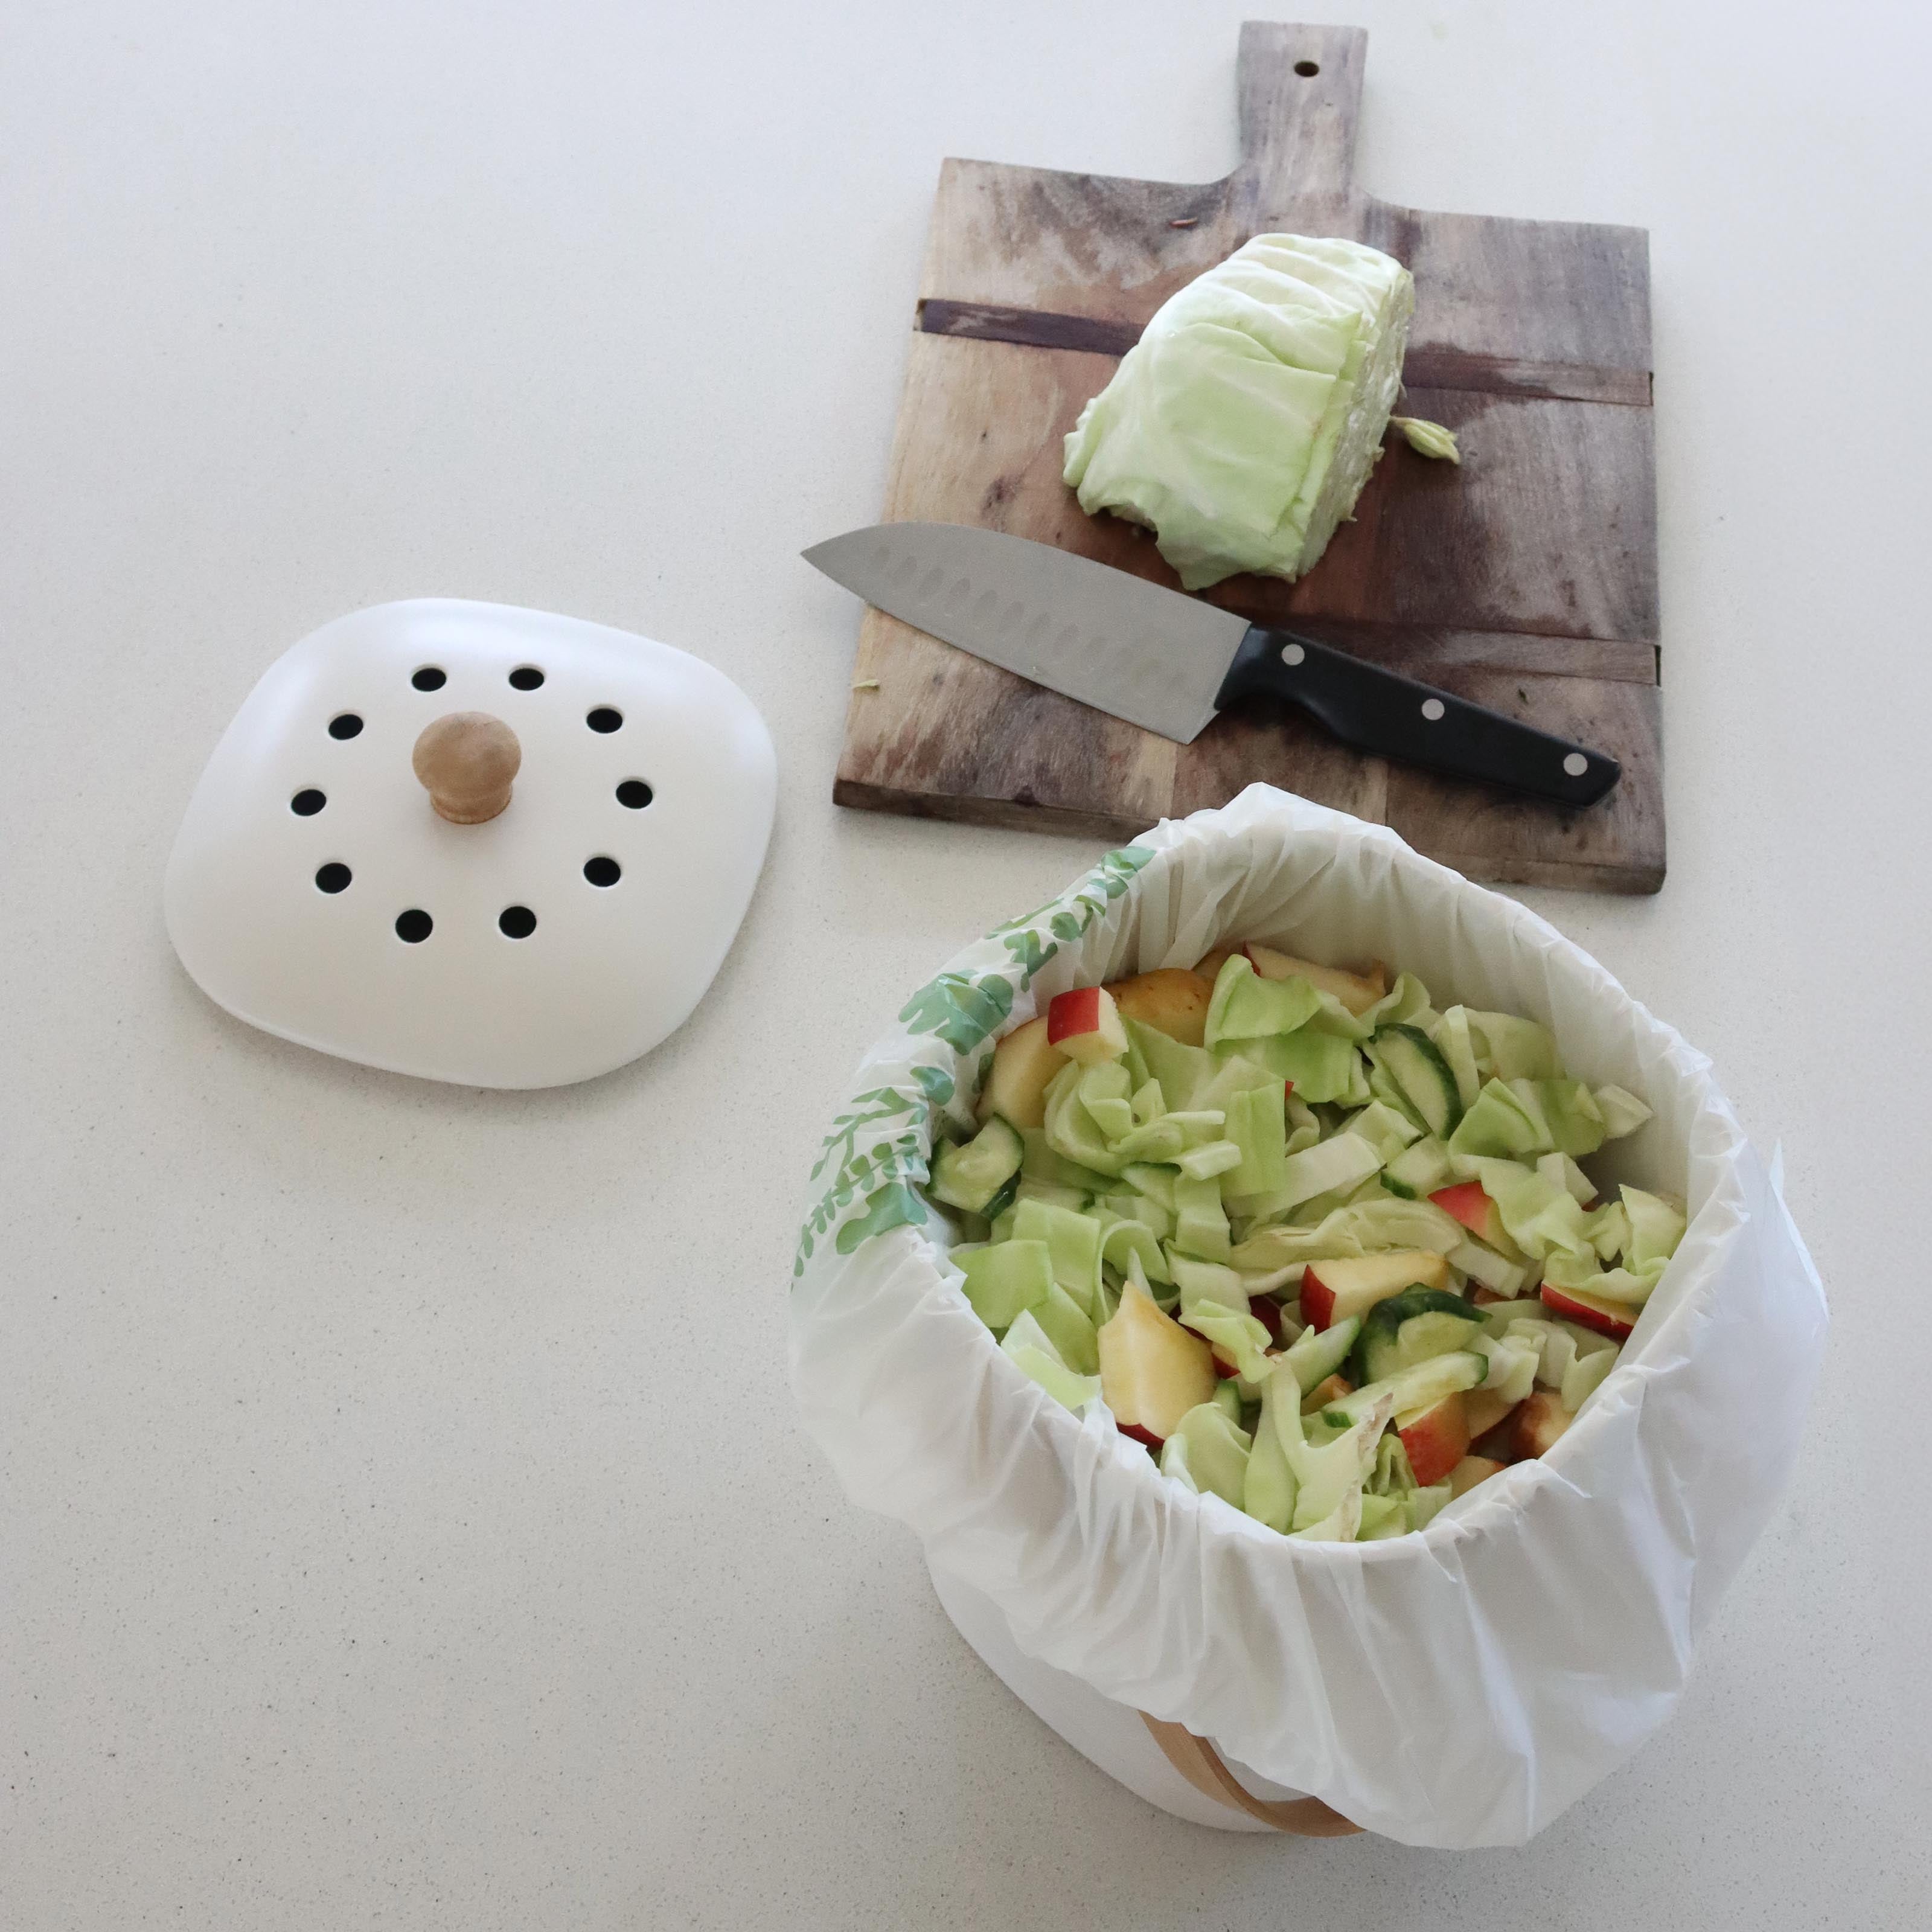 Kitchen Countertop Food Waste Bin